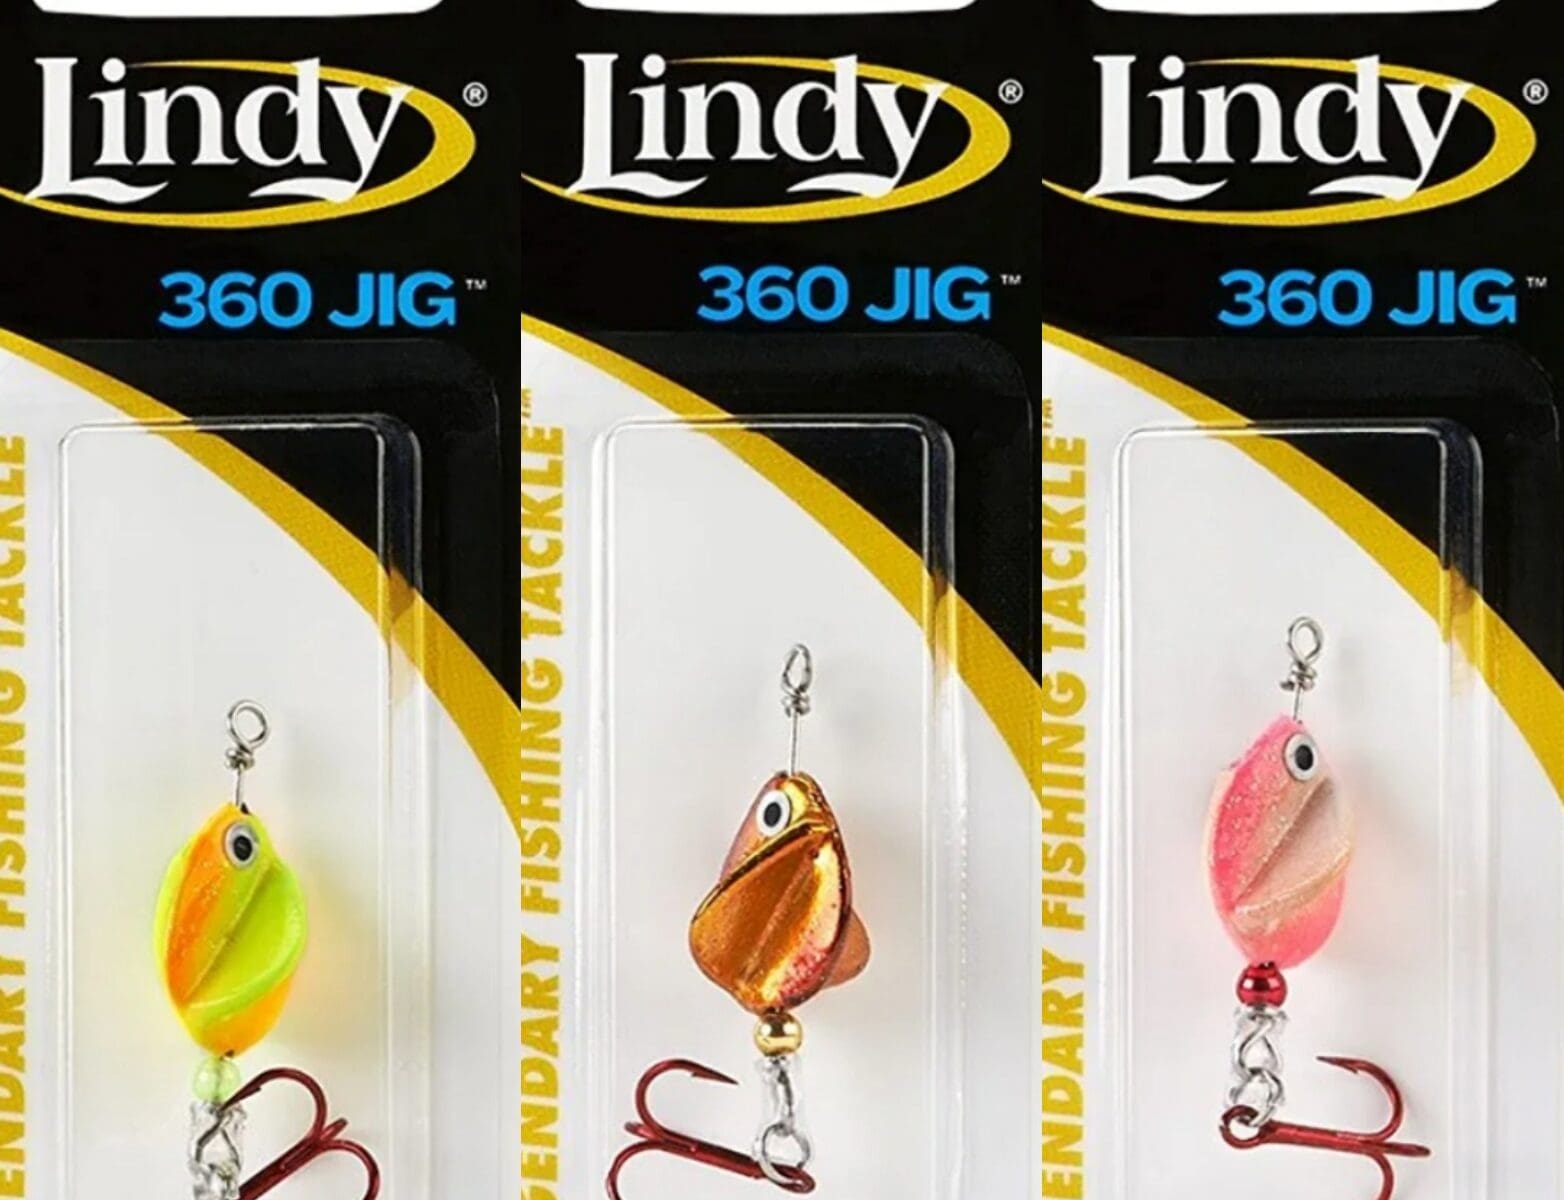 Lindy 360 Jigs - Size 1/8 oz.